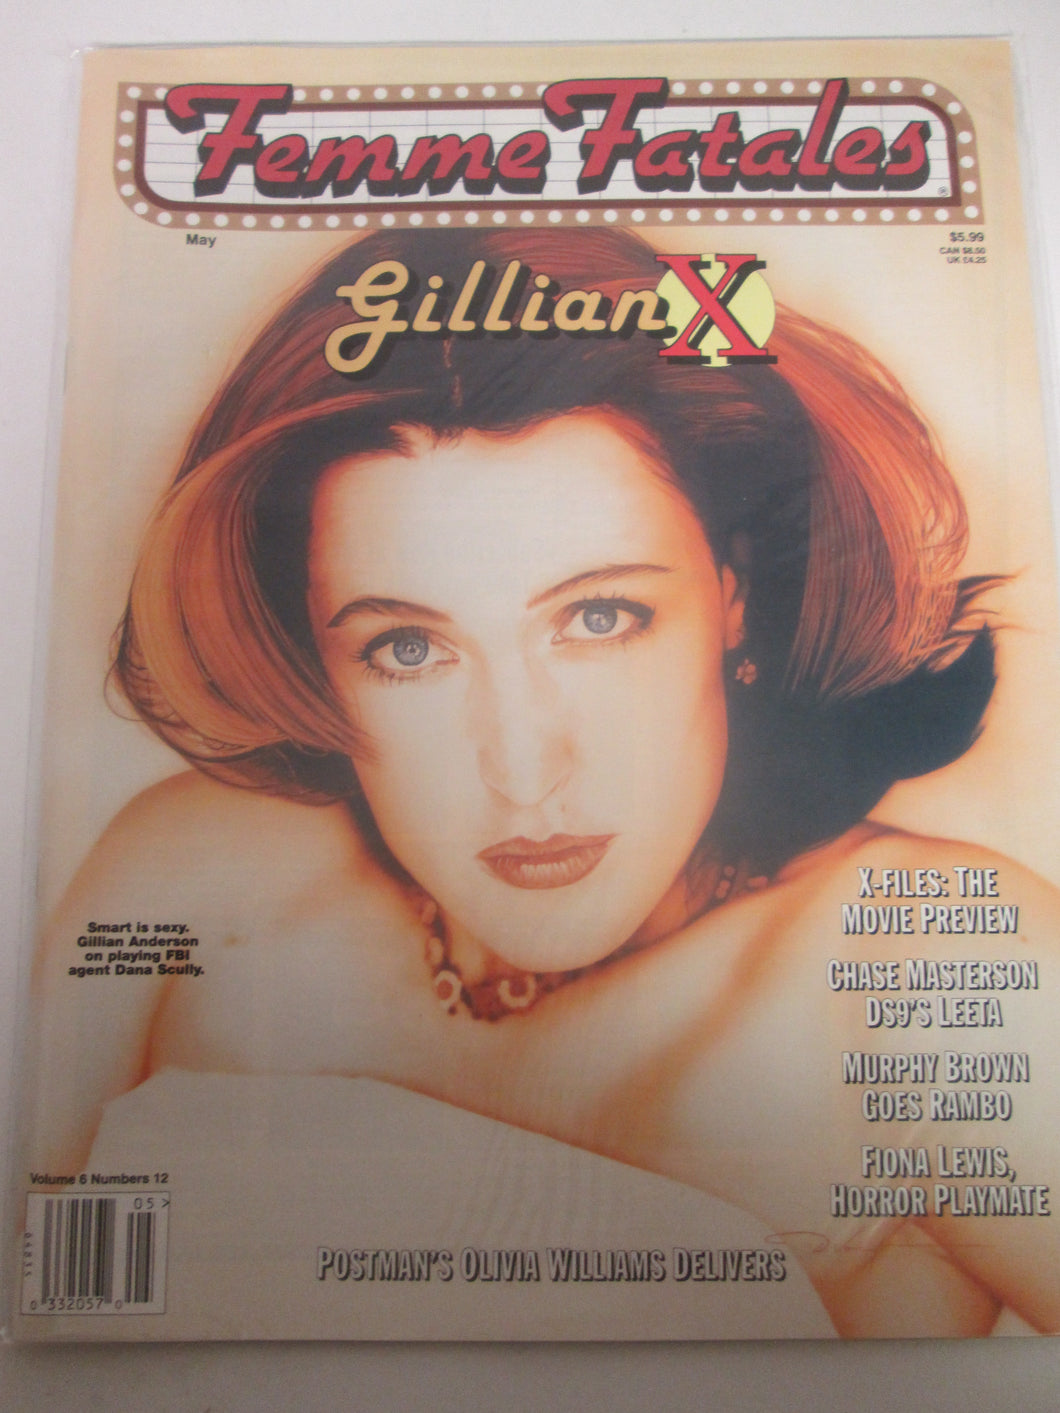 Femme Fatales Magazine Gillian X Gillian Anderson Cover Vol 6 # 12